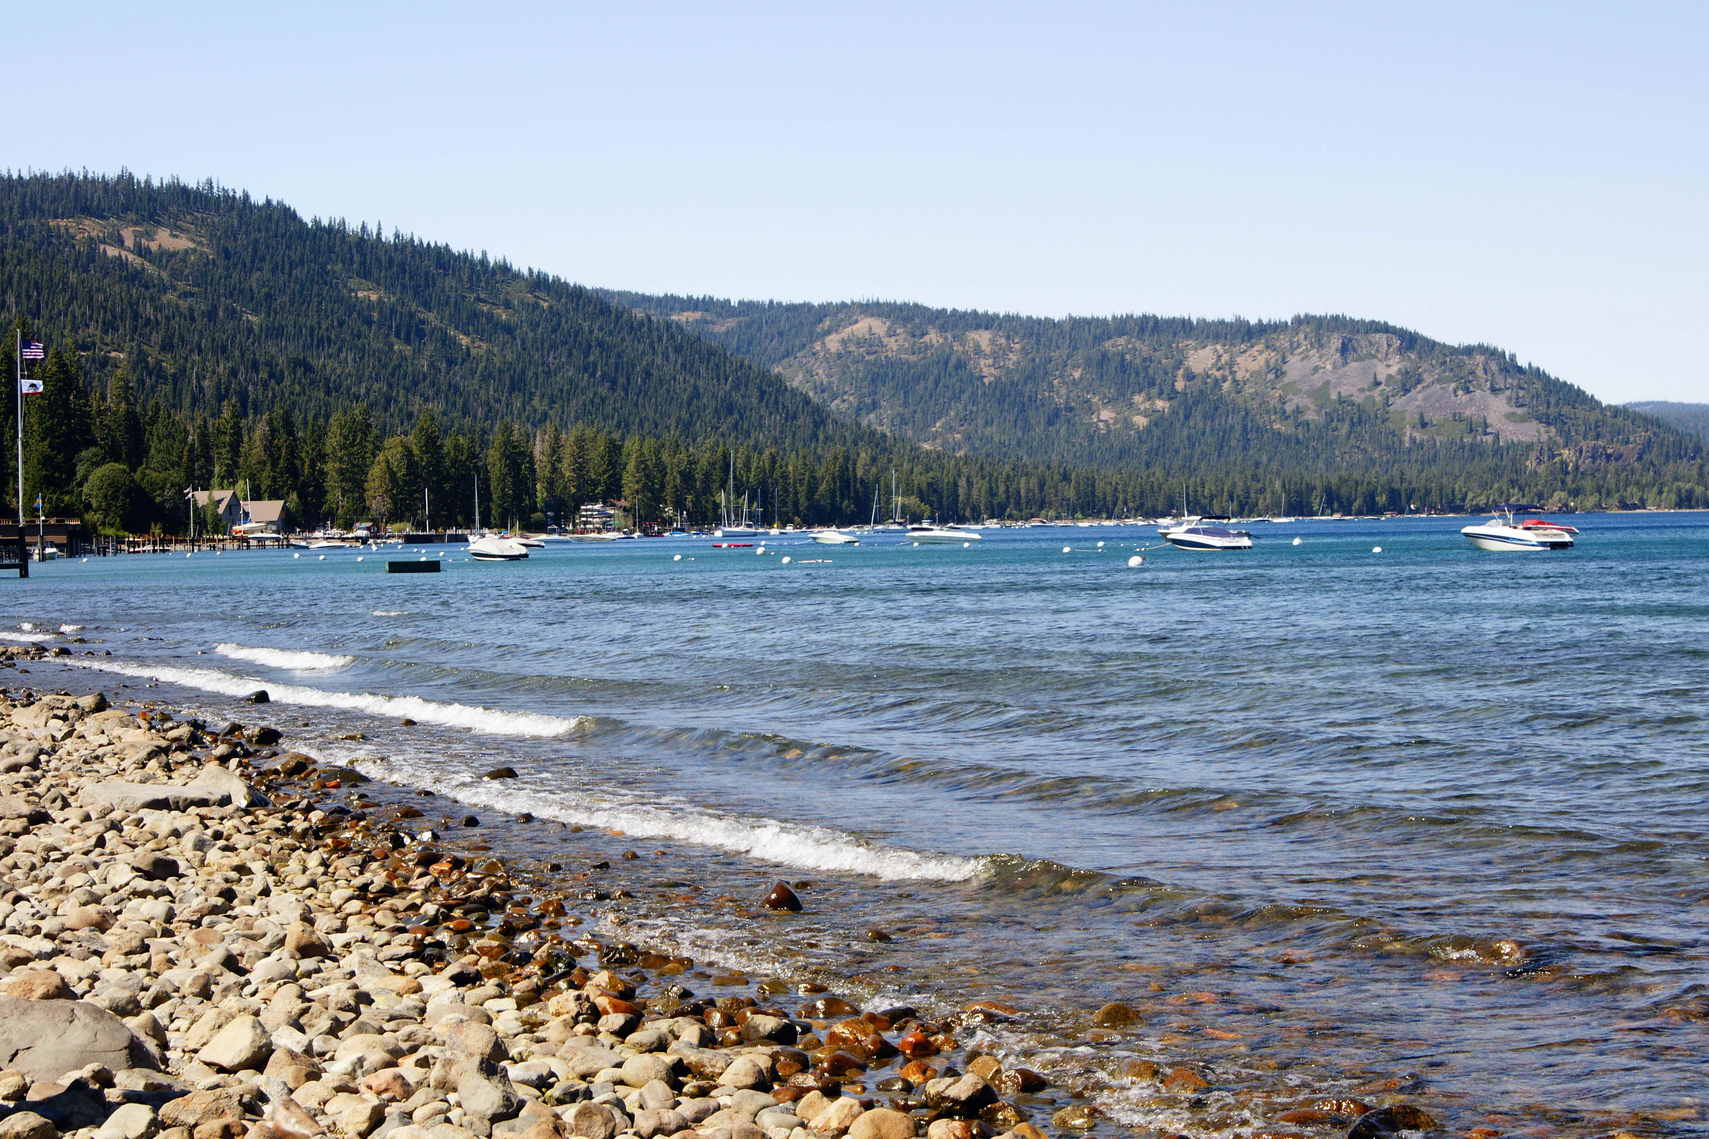 Lake Tahoe, CA: Over seeing the Lake Tahoe